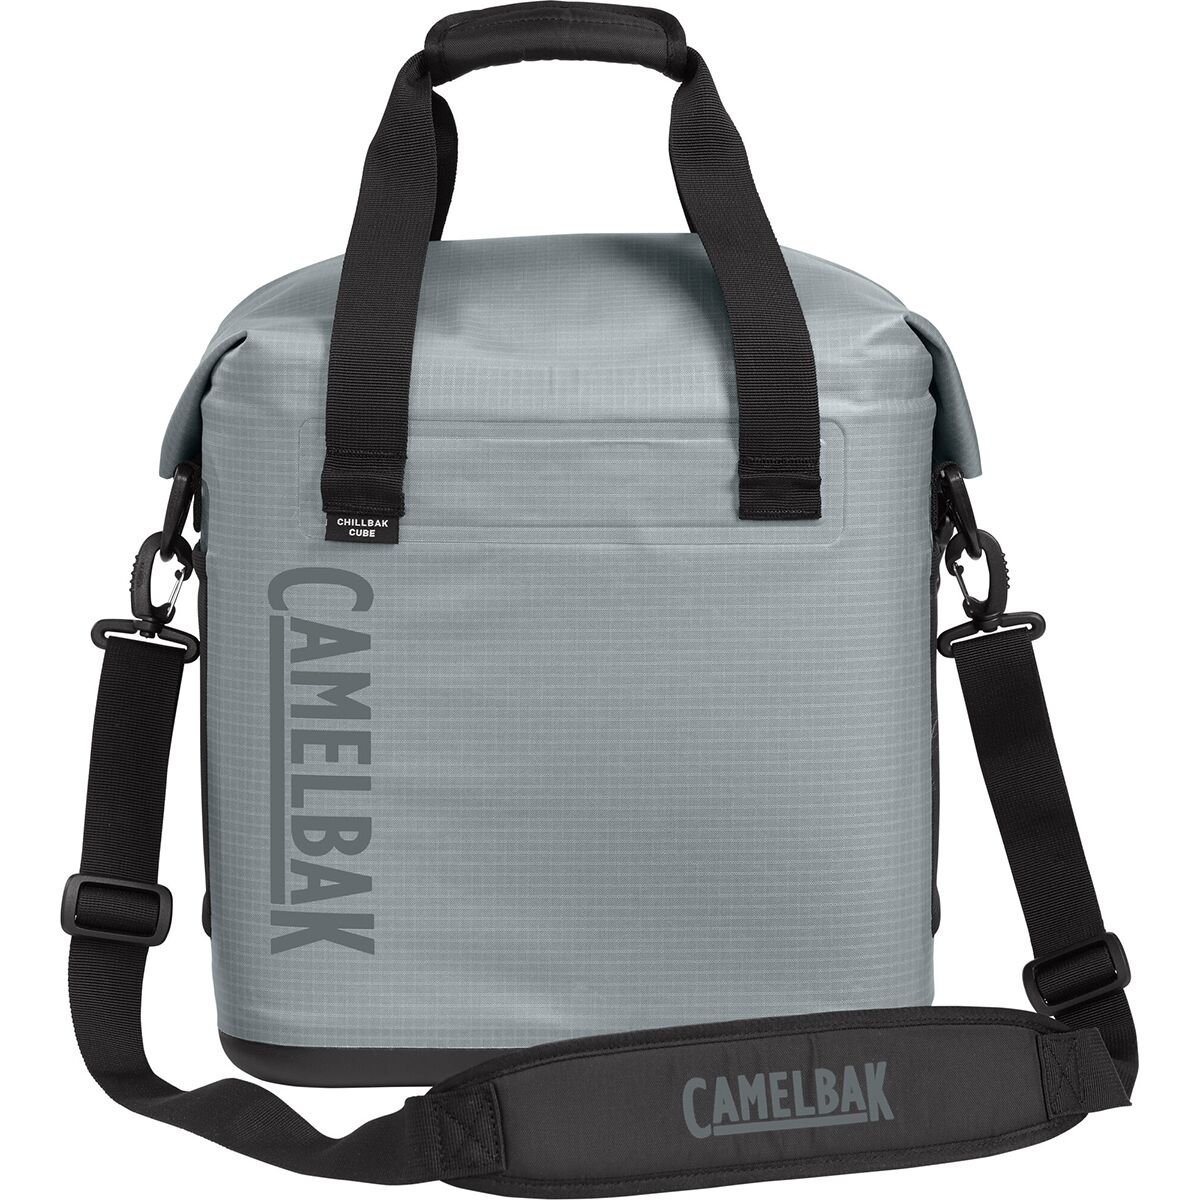 Photos - Cooler Bag CamelBak Chillbak Cube 18L Cooler + Fusion 3L Group Reservoir 